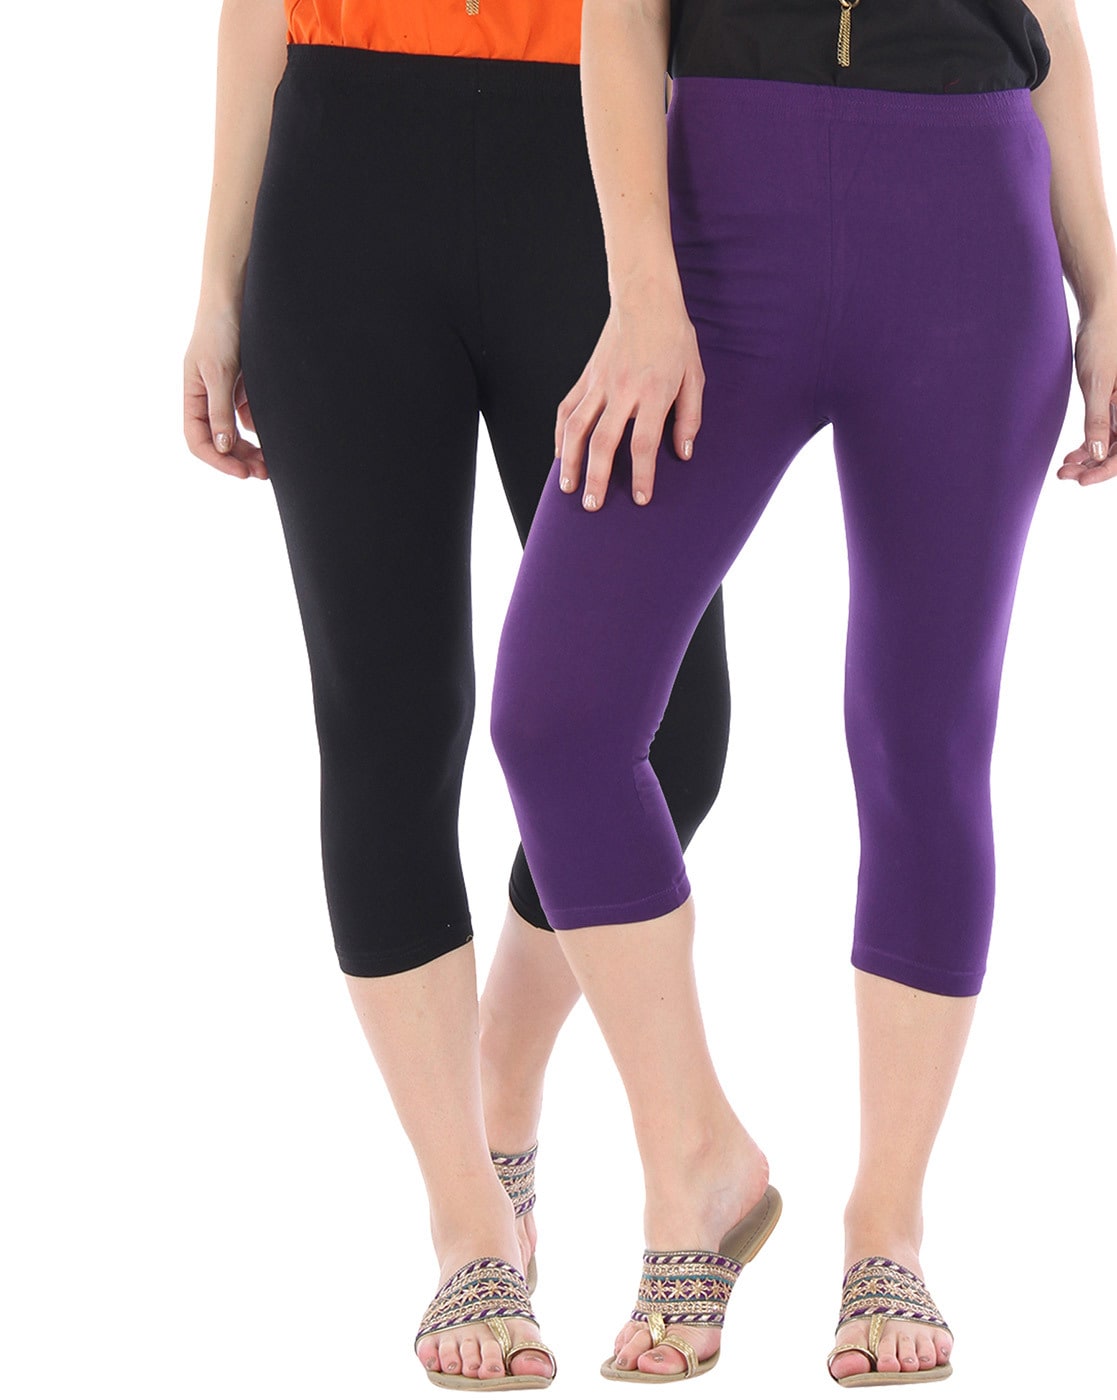 Buy RRTBZ Woolen Leggings for Women- Green & Black & Purple (Pack of Three)  - XL at Amazon.in